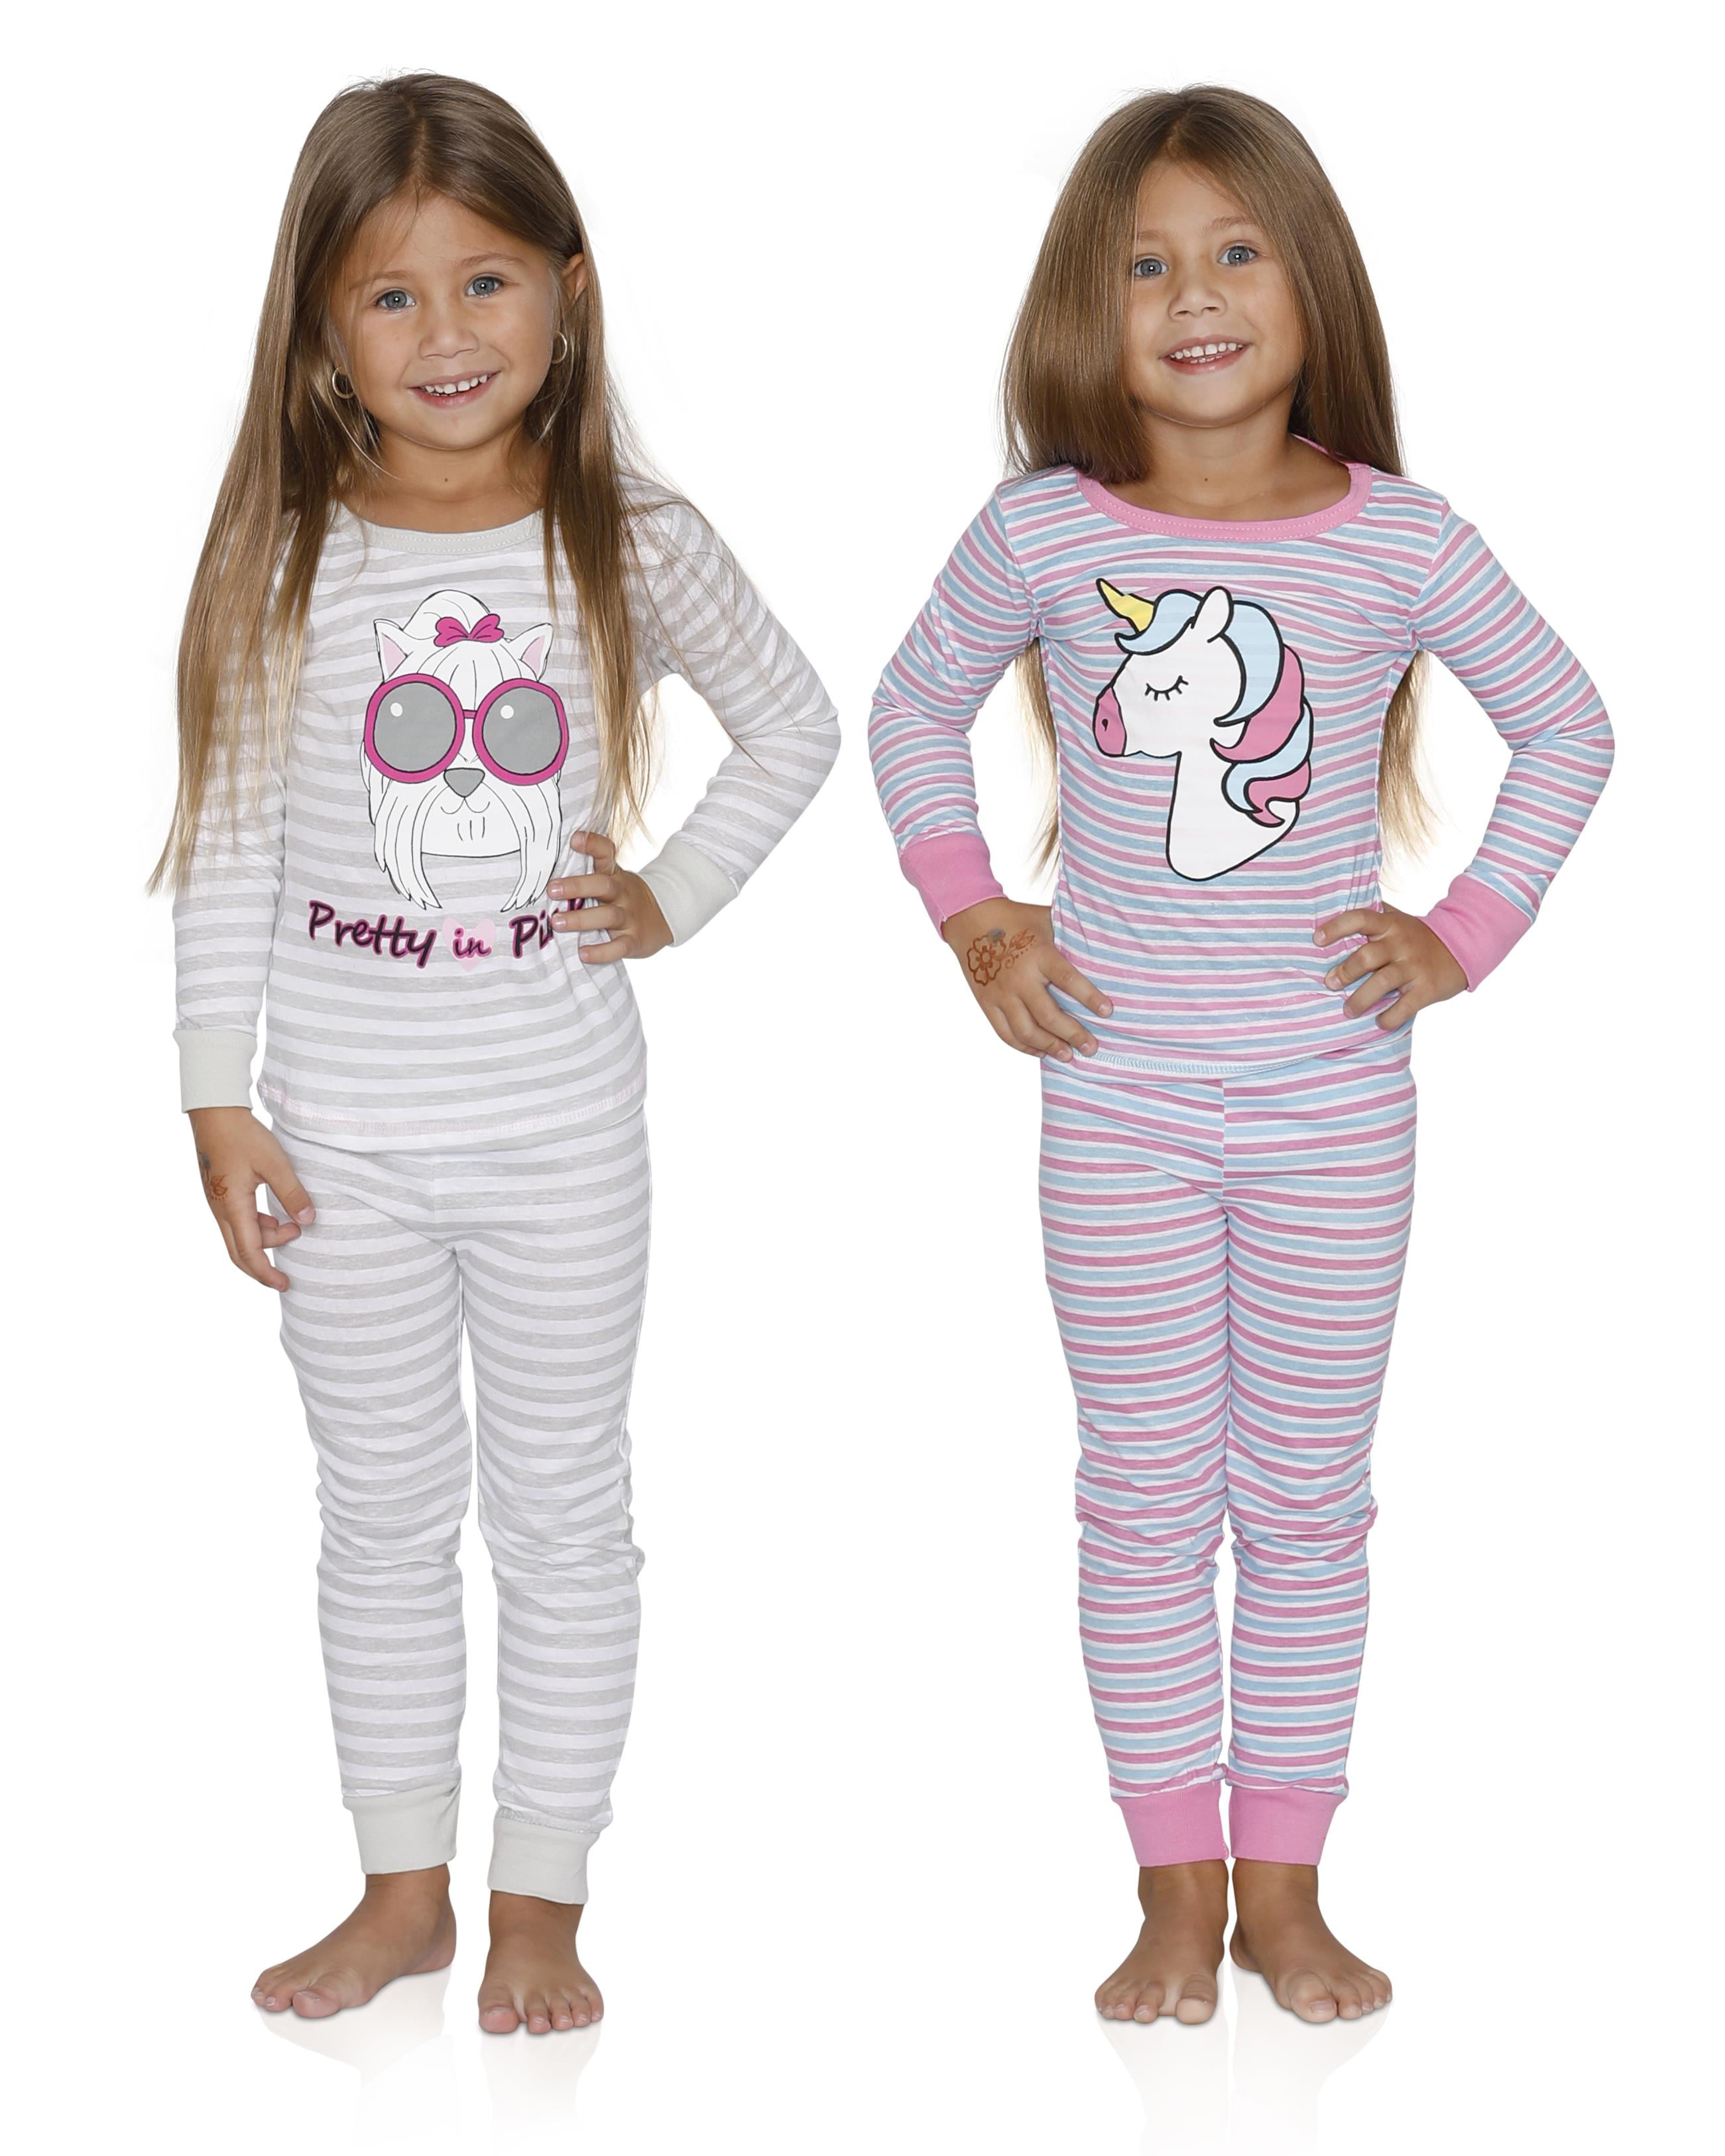 Prestigez - Cozy Couture Girls Pajama Fun Print Cotton Top and Pants 4 ...